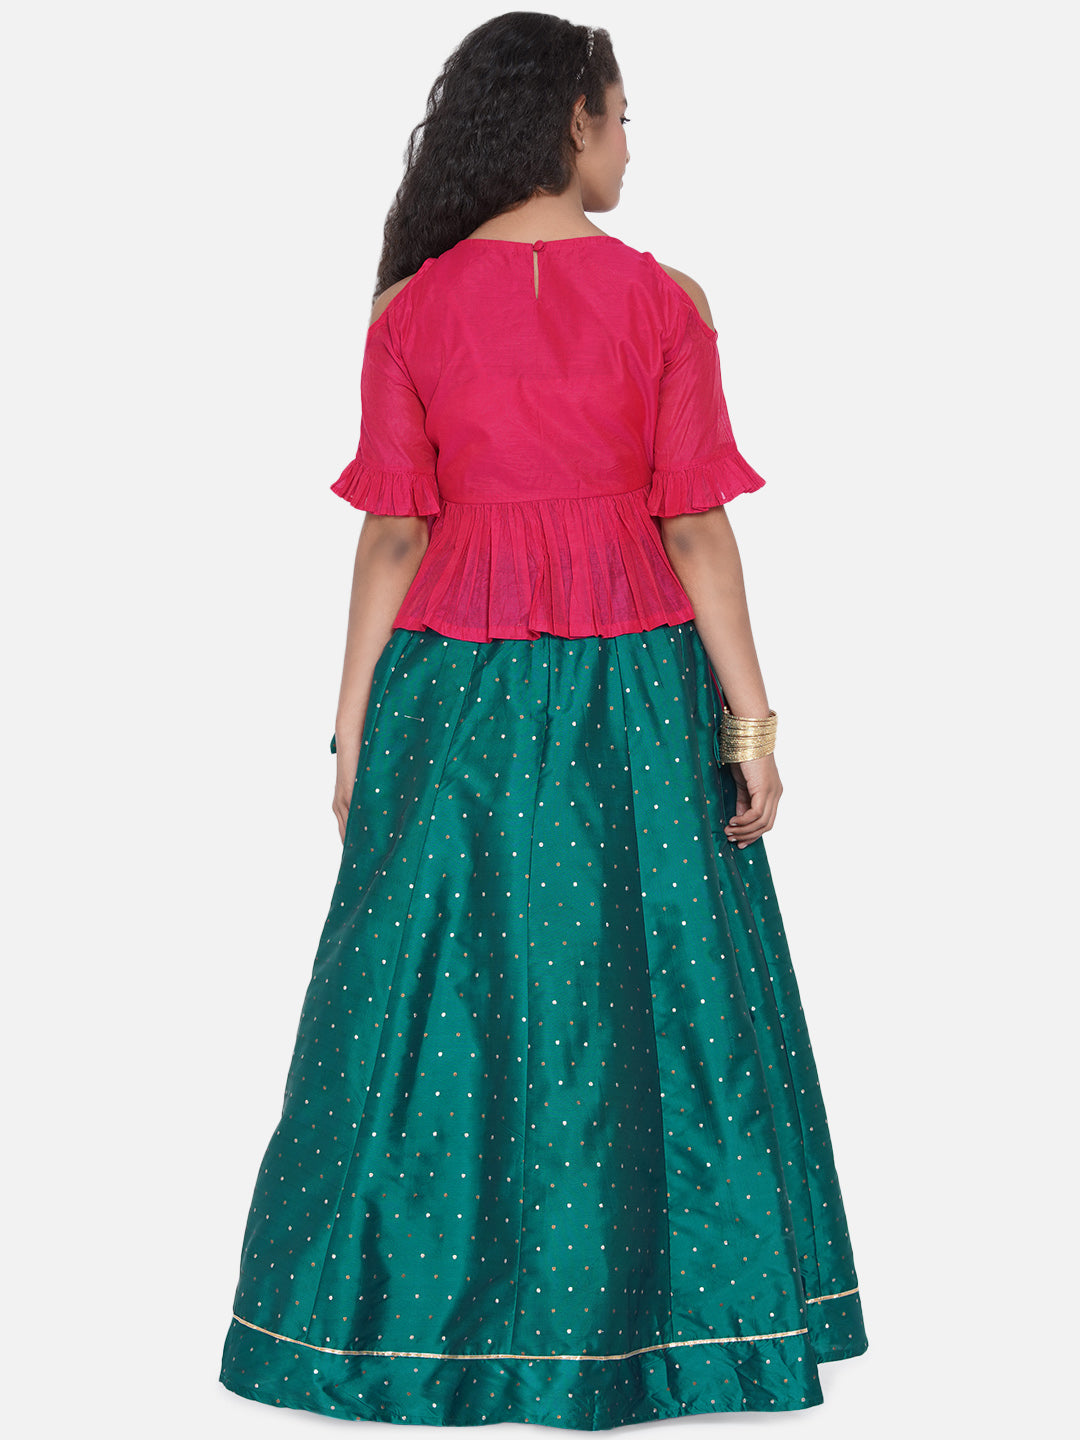 Girls Pink & Green Embroidered Choli Ready To Wear Lehenga - Bitiya By Bhama